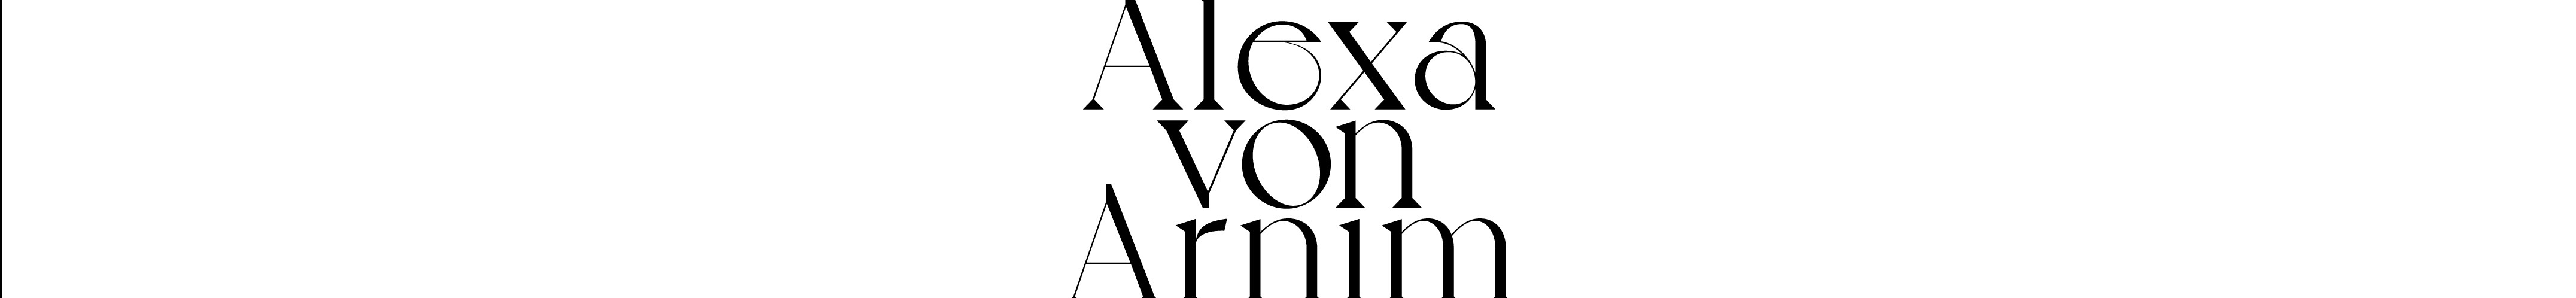 Profielbanner van Alexa von Arnim